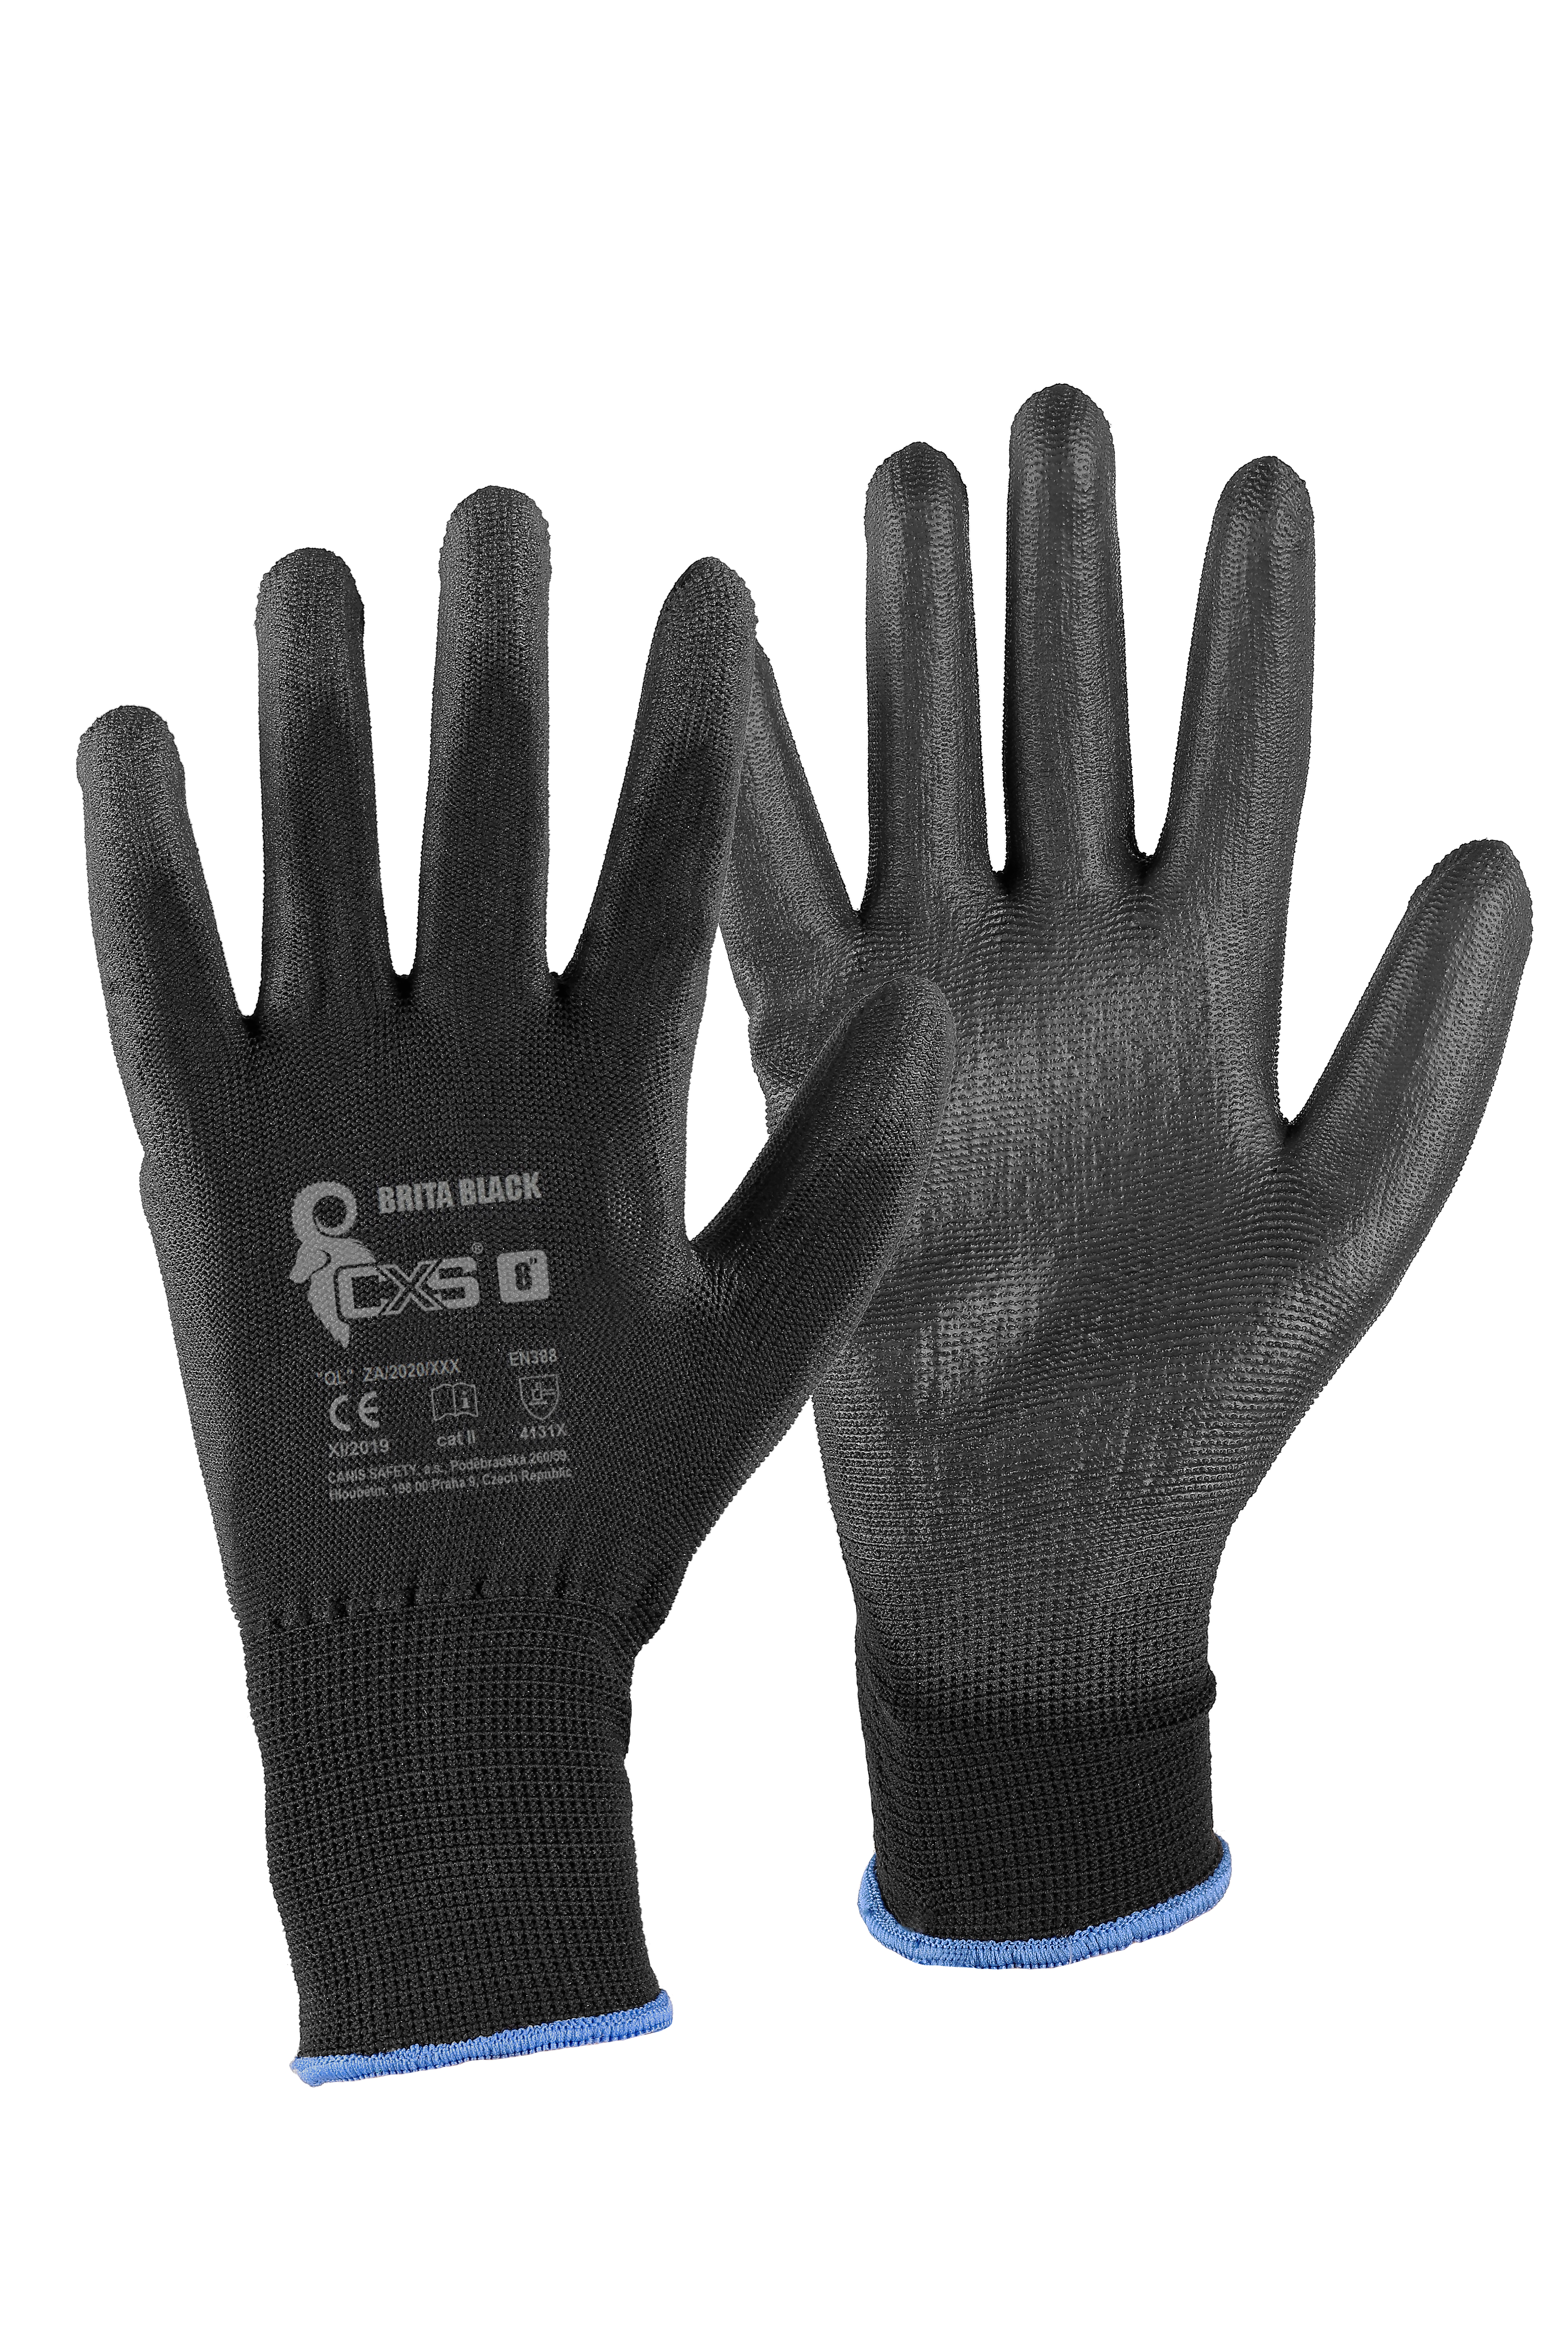 rukavice BRITA BLACK, s PU dlaní a úpletem, velikost 10 0.02 Kg TOP Sklad4 606049 95